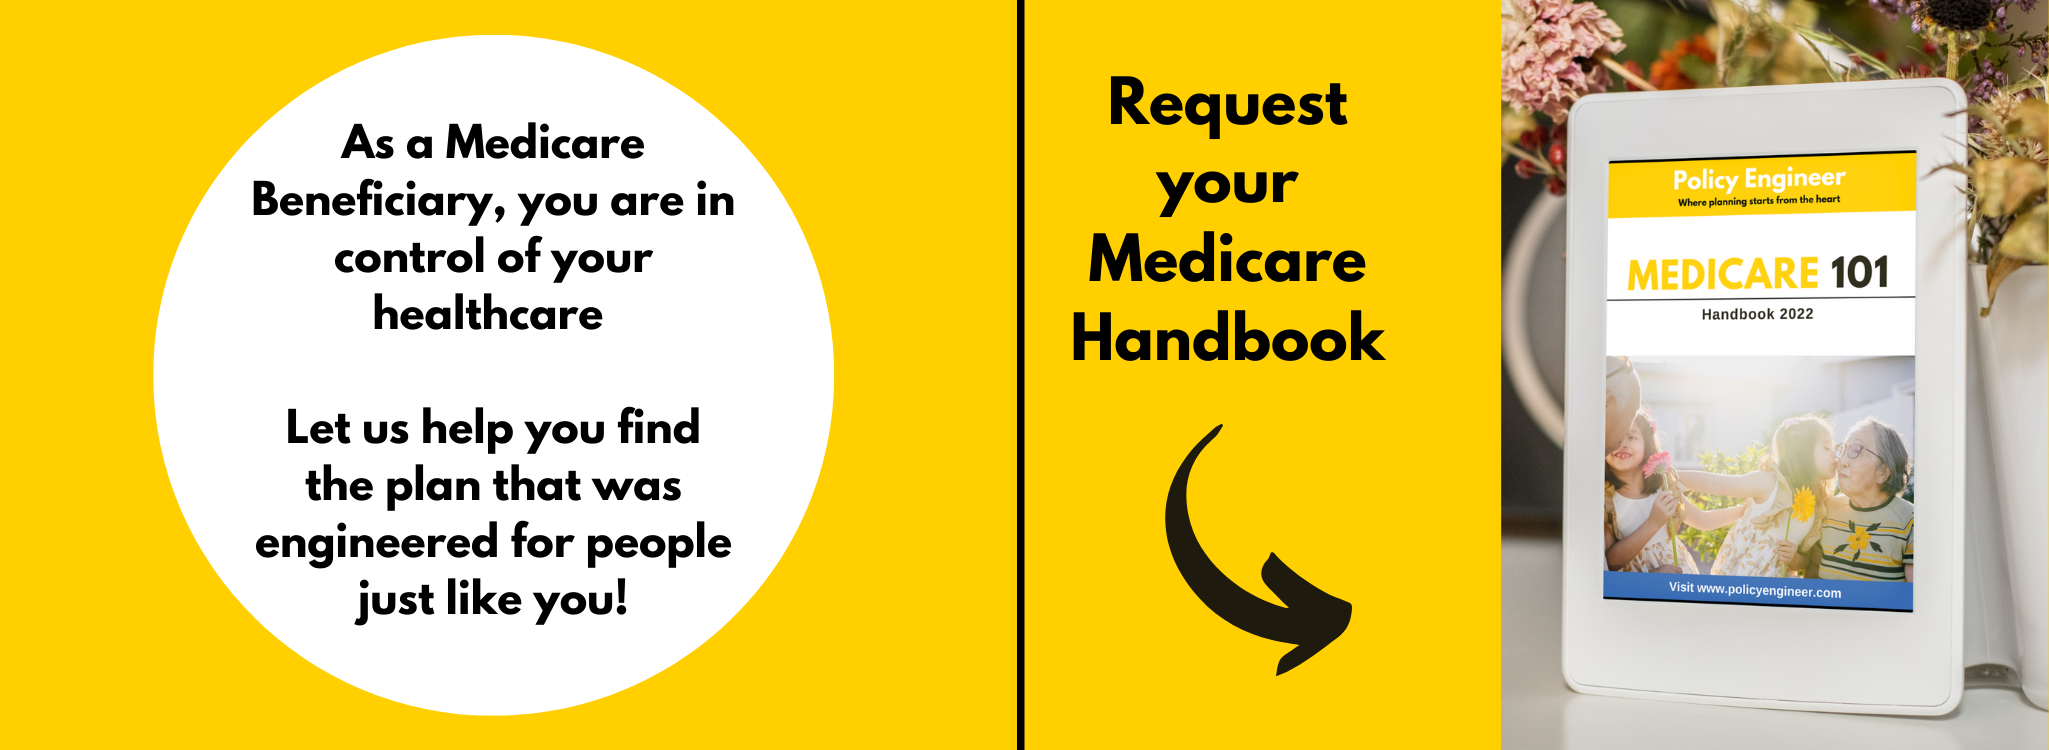 Medicare handbook banner request (1)